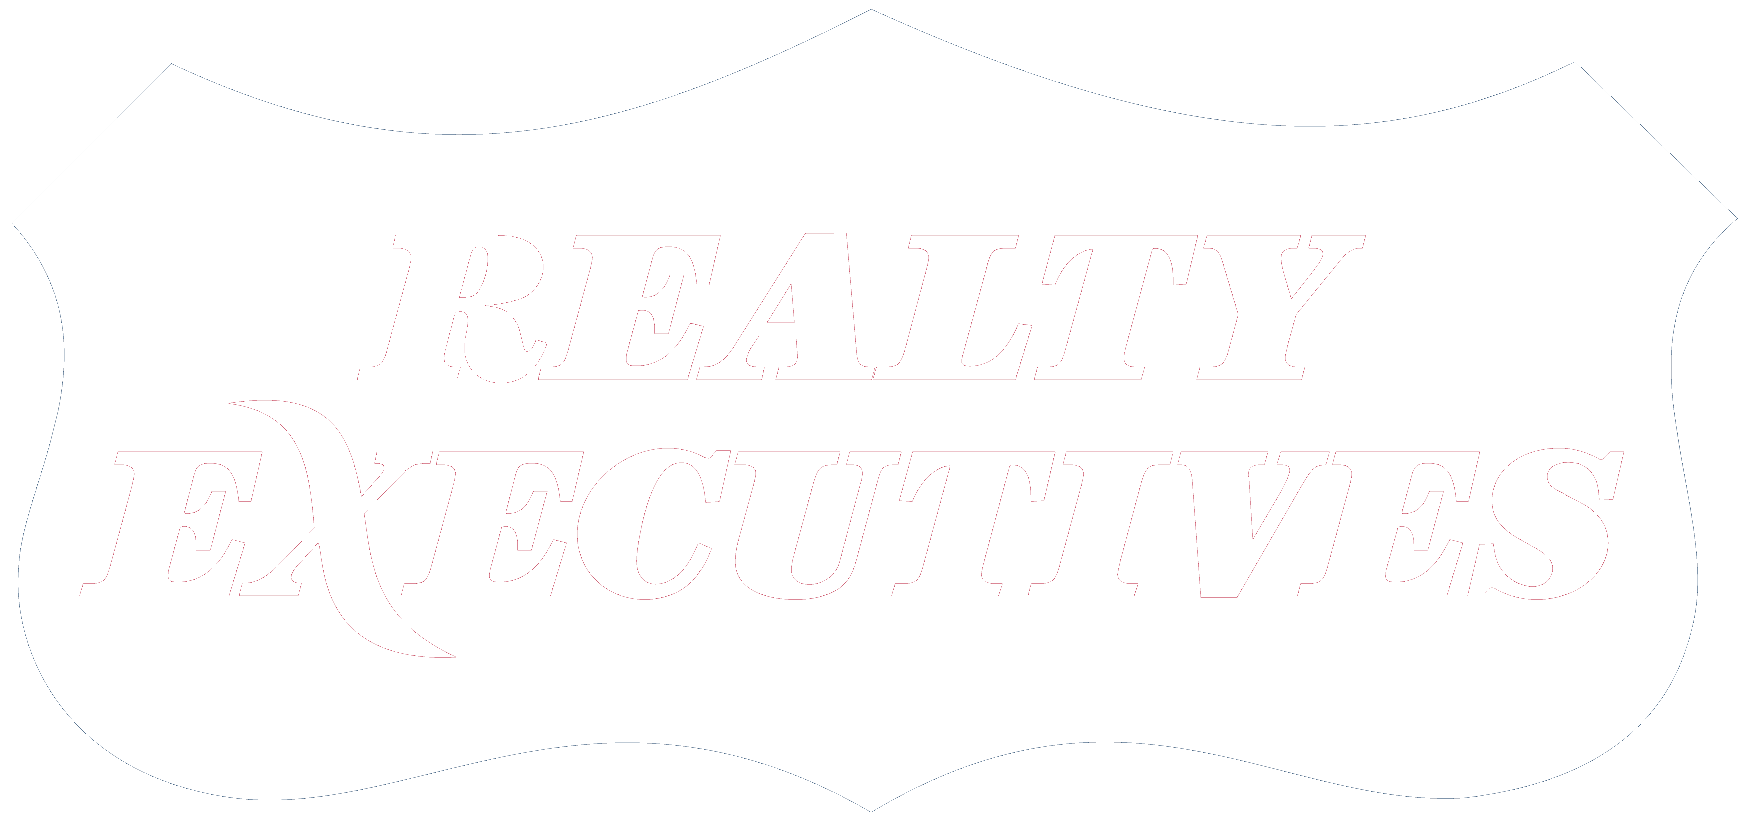 realty-executives-logo-white